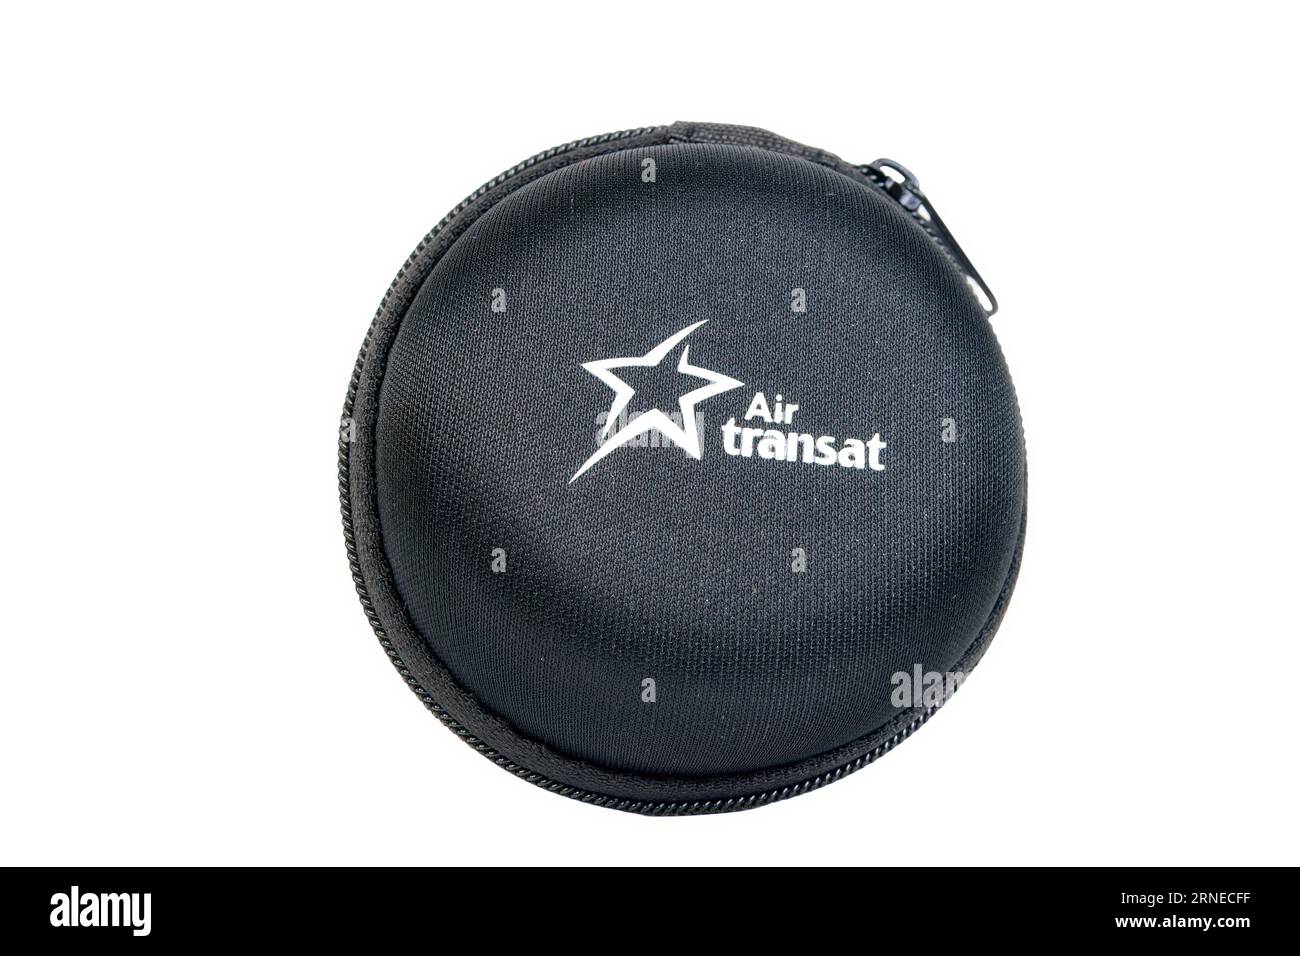 Logo of Air Transat in a headphones case. Stock Photo